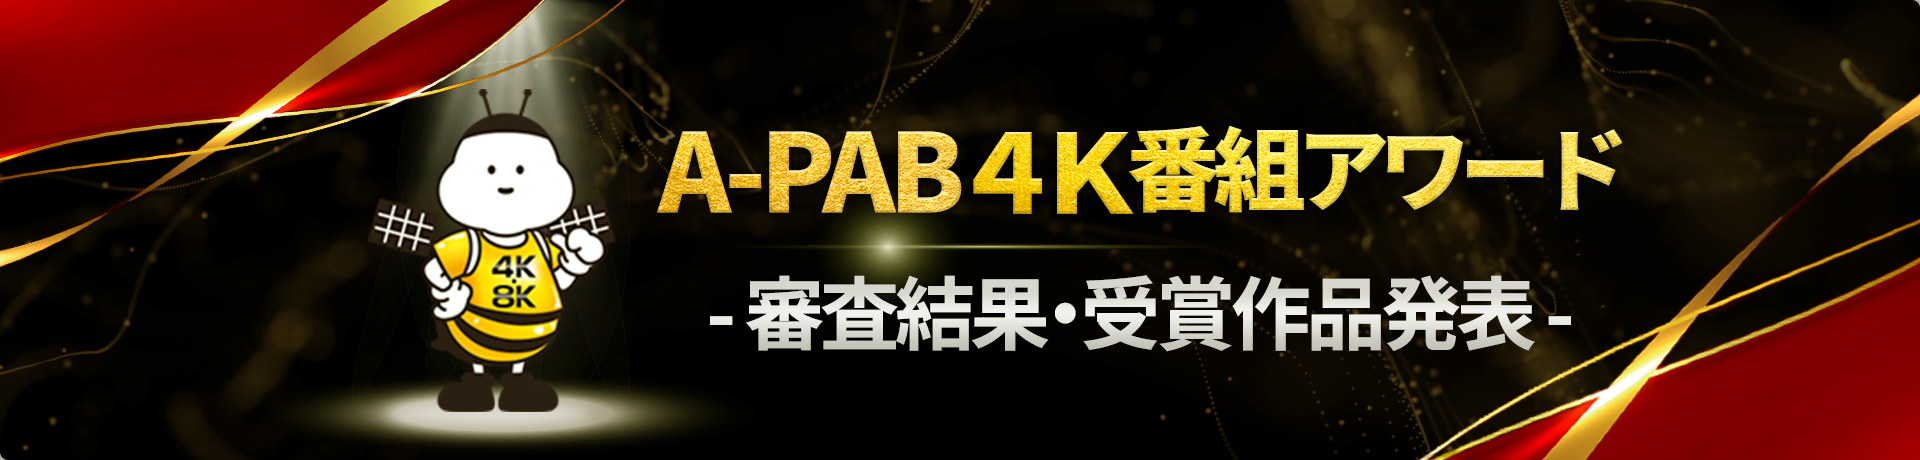 A-PAB 4K番組アワード 審査結果・受賞作品発表